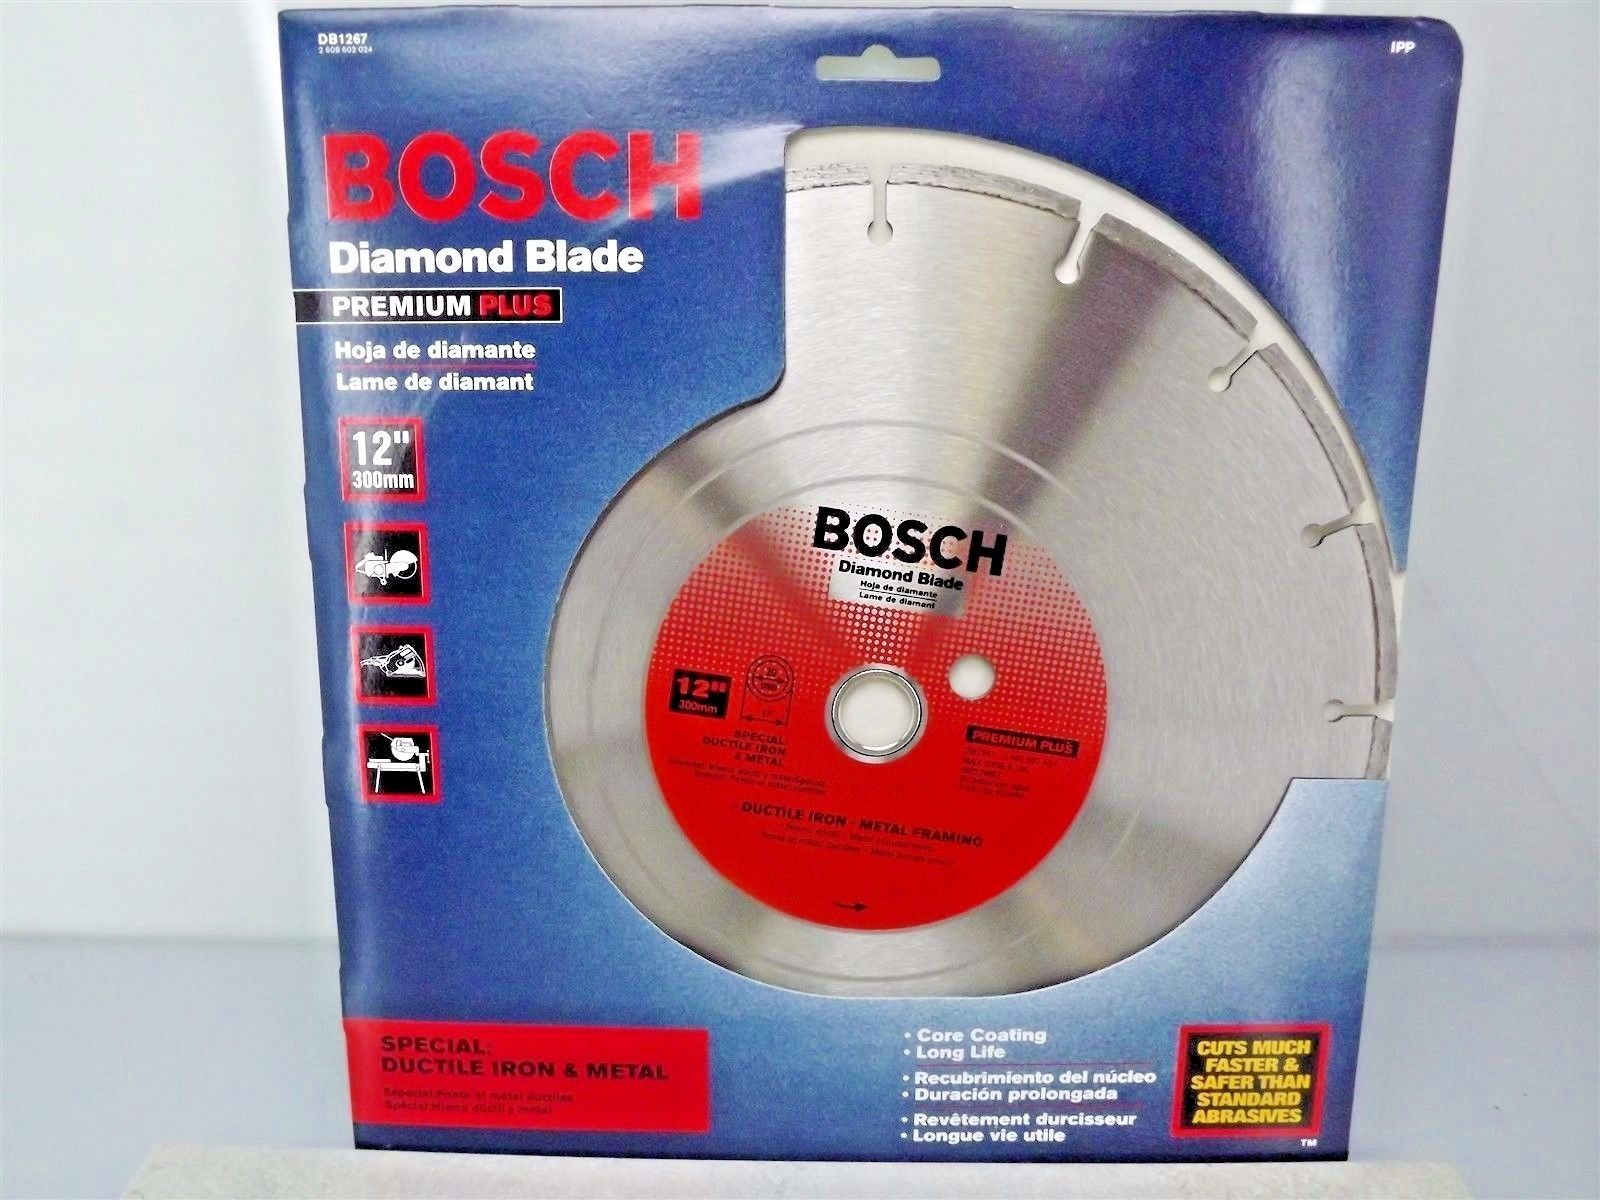 Bosch DB1267 Premium Plus 12" Dry or Wet Metal Cutting Seg Diamond Saw Blade